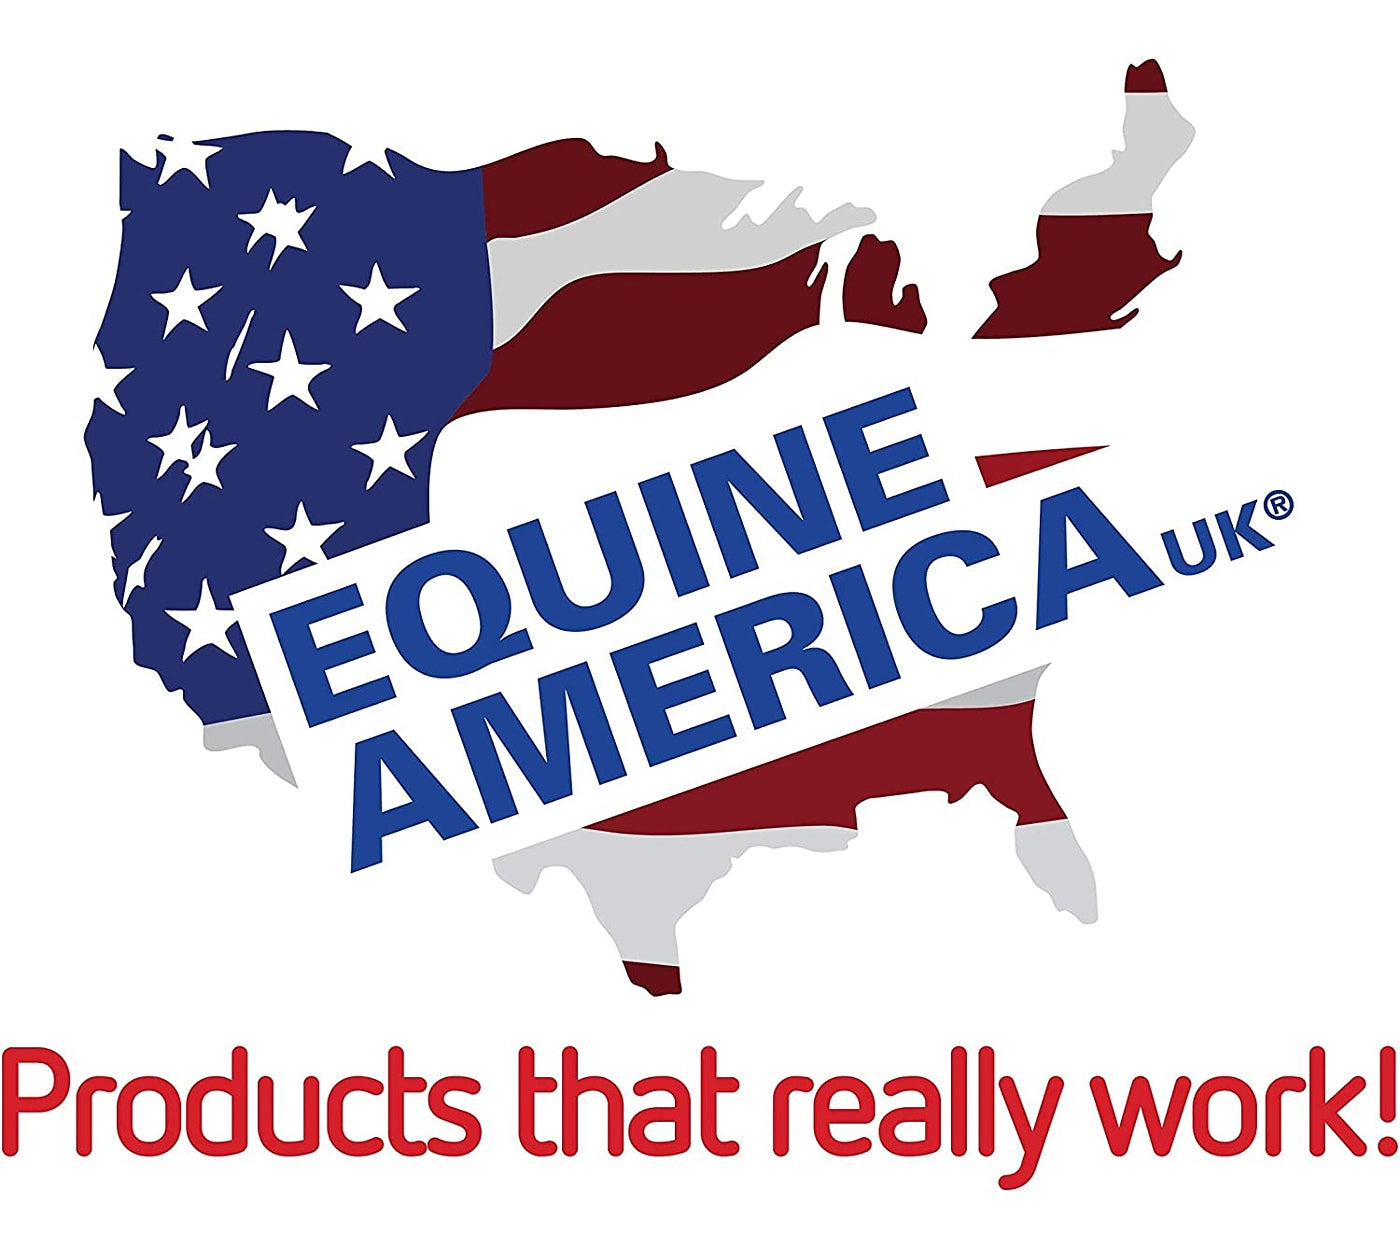 Equine America - Glucosamine HCl 12,000 Xtra Strength Powder 1kg - Buy Online SPR Centre UK